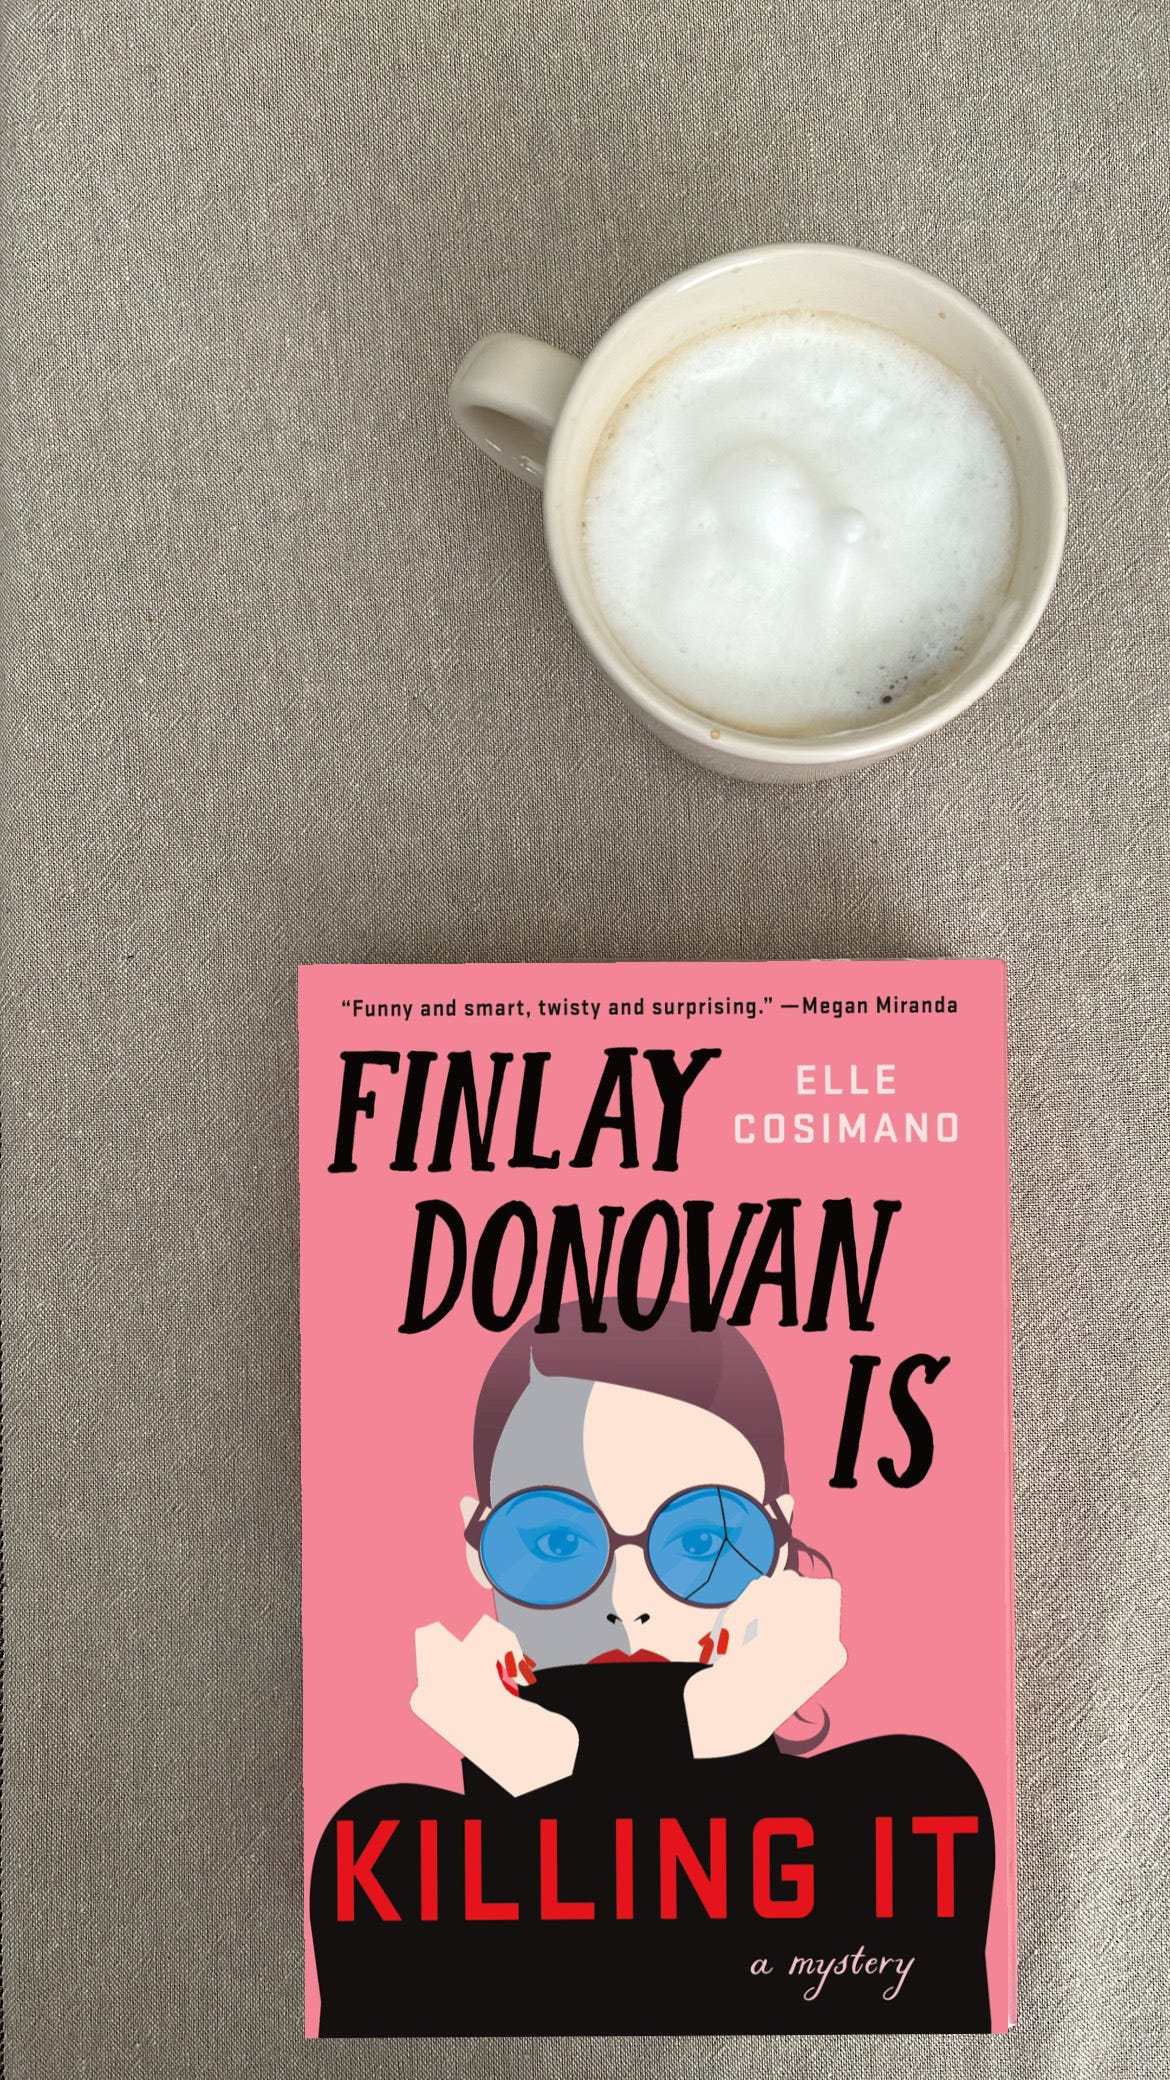 Finlay Donovan is killing it